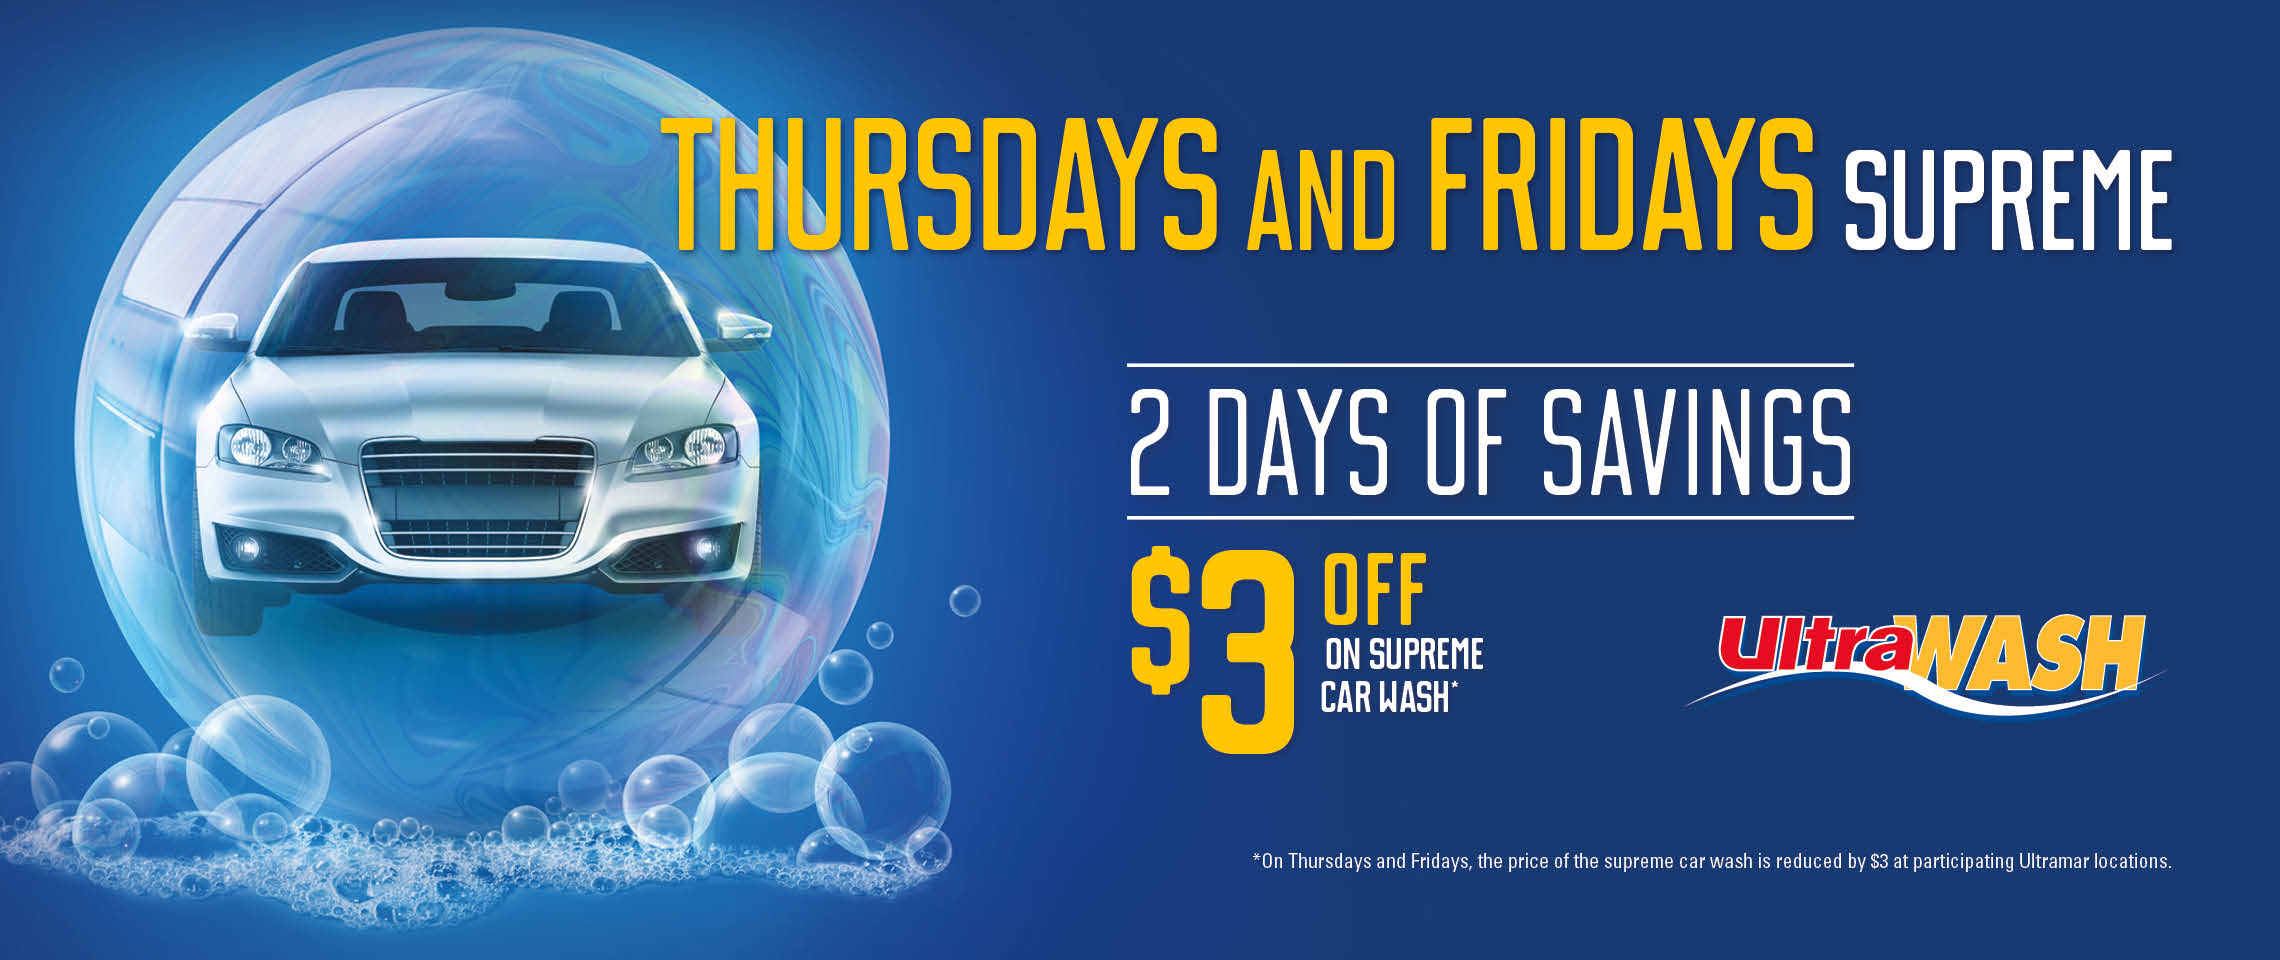 Ultramar - Thursdays and Fridays supreme -3$ on supreme car wash. 2 Days of savings